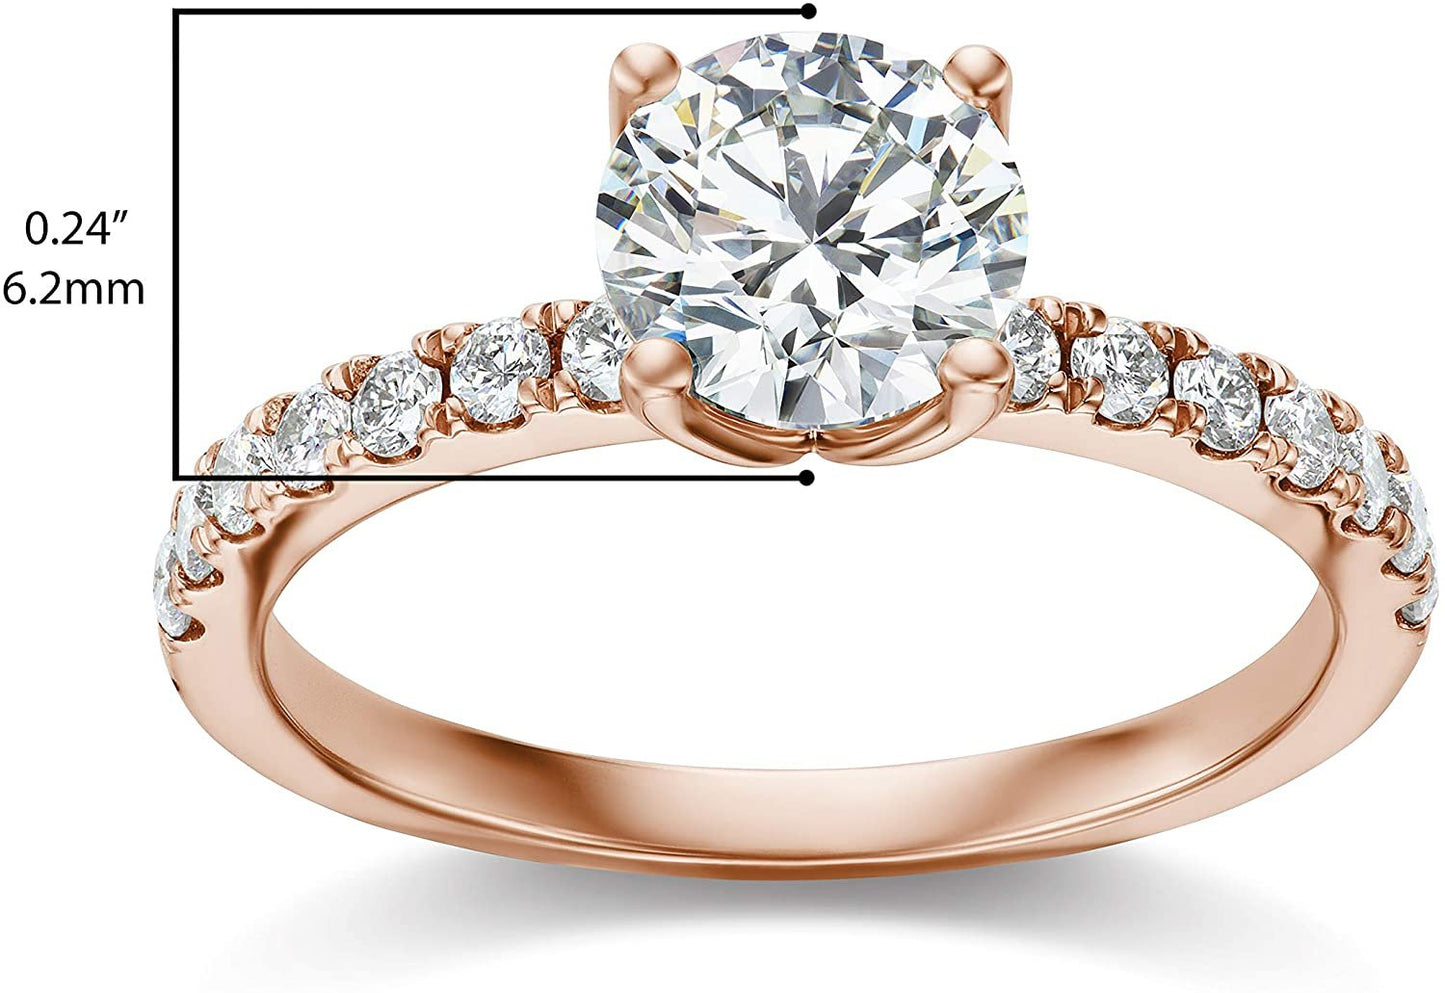 IGI Certified 14K Rose Gold 1.0+ Cttw Brilliant-Cut Lab Created Diamond Solitaire Engagement Ring with Pavé-Set Band (9/10 Carat Center: I-J Color, VS1-VS2 Clarity) - Size 6-1/4